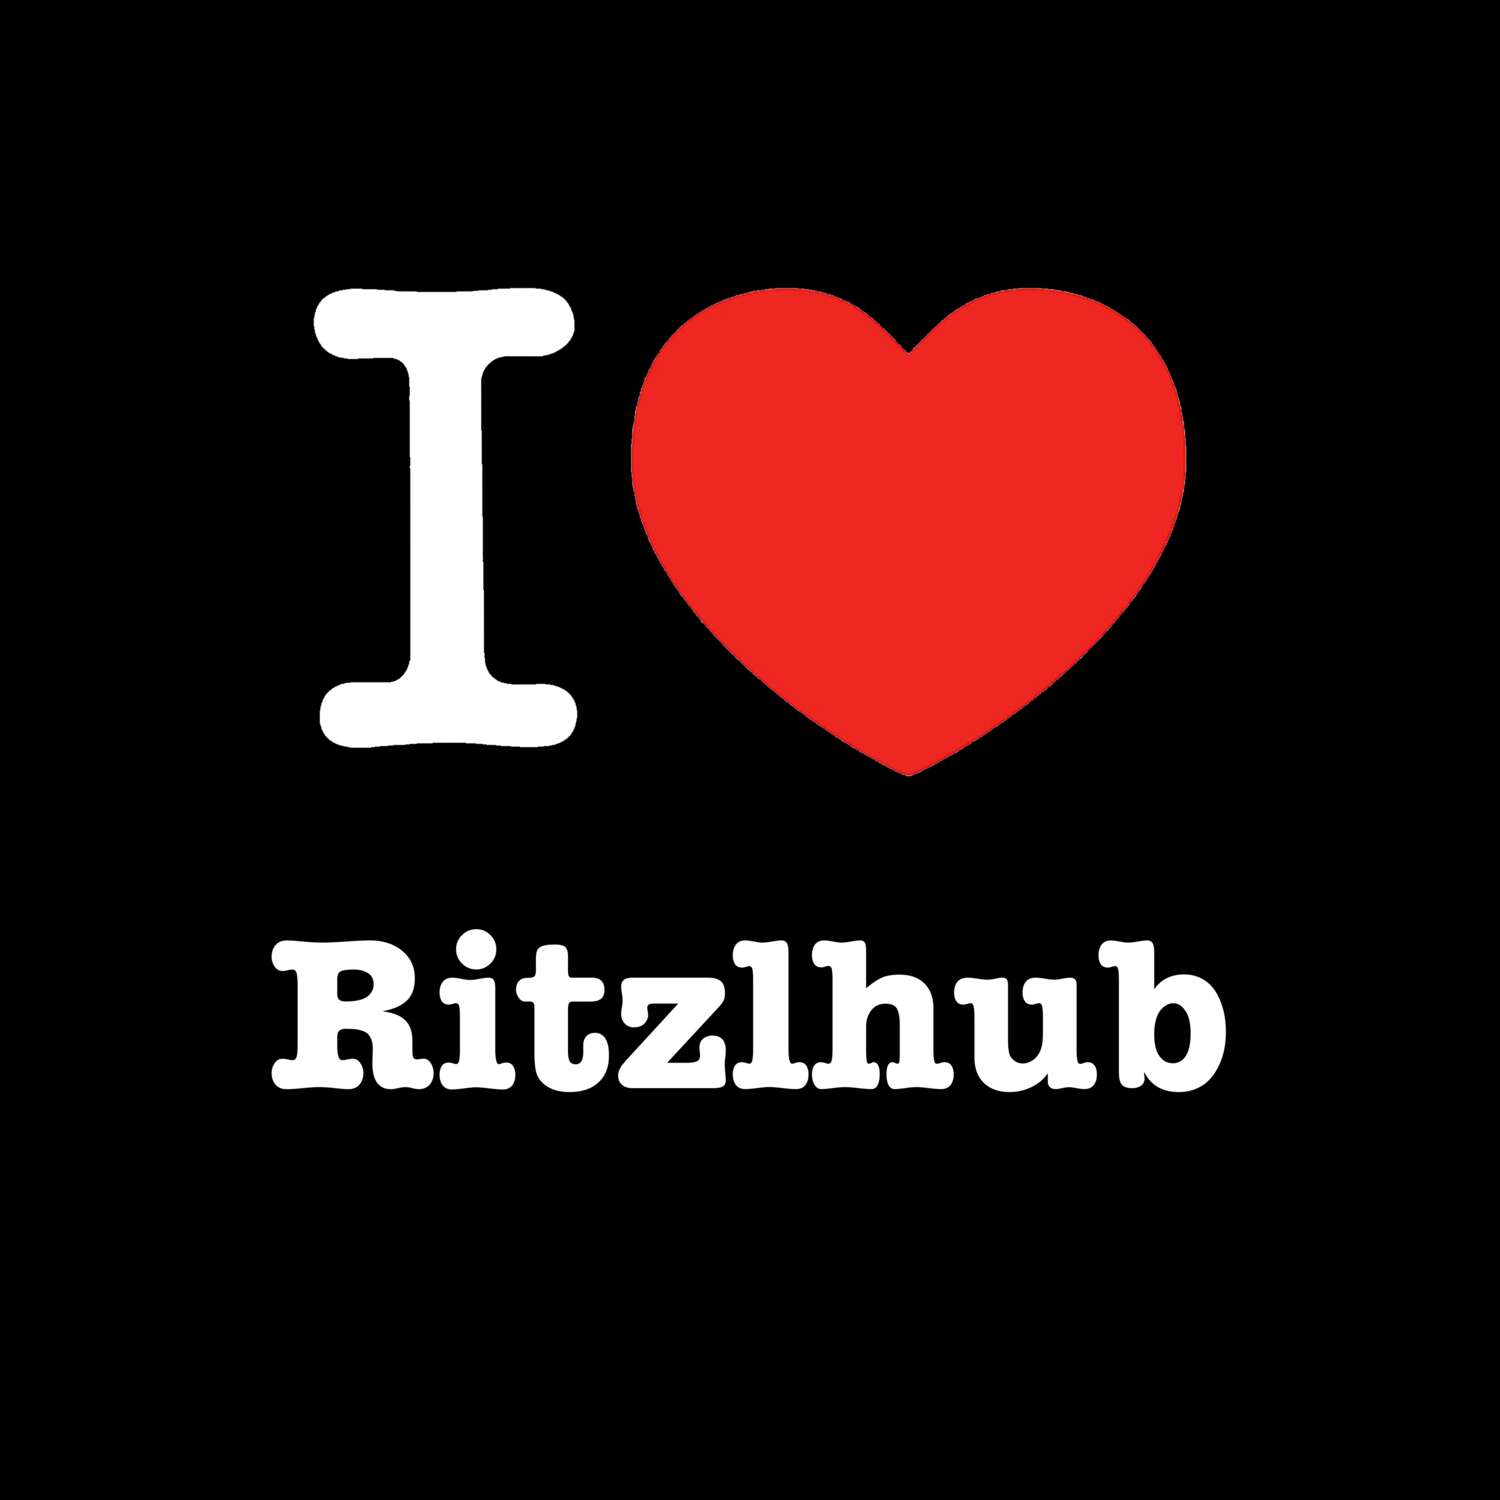 Ritzlhub T-Shirt »I love«